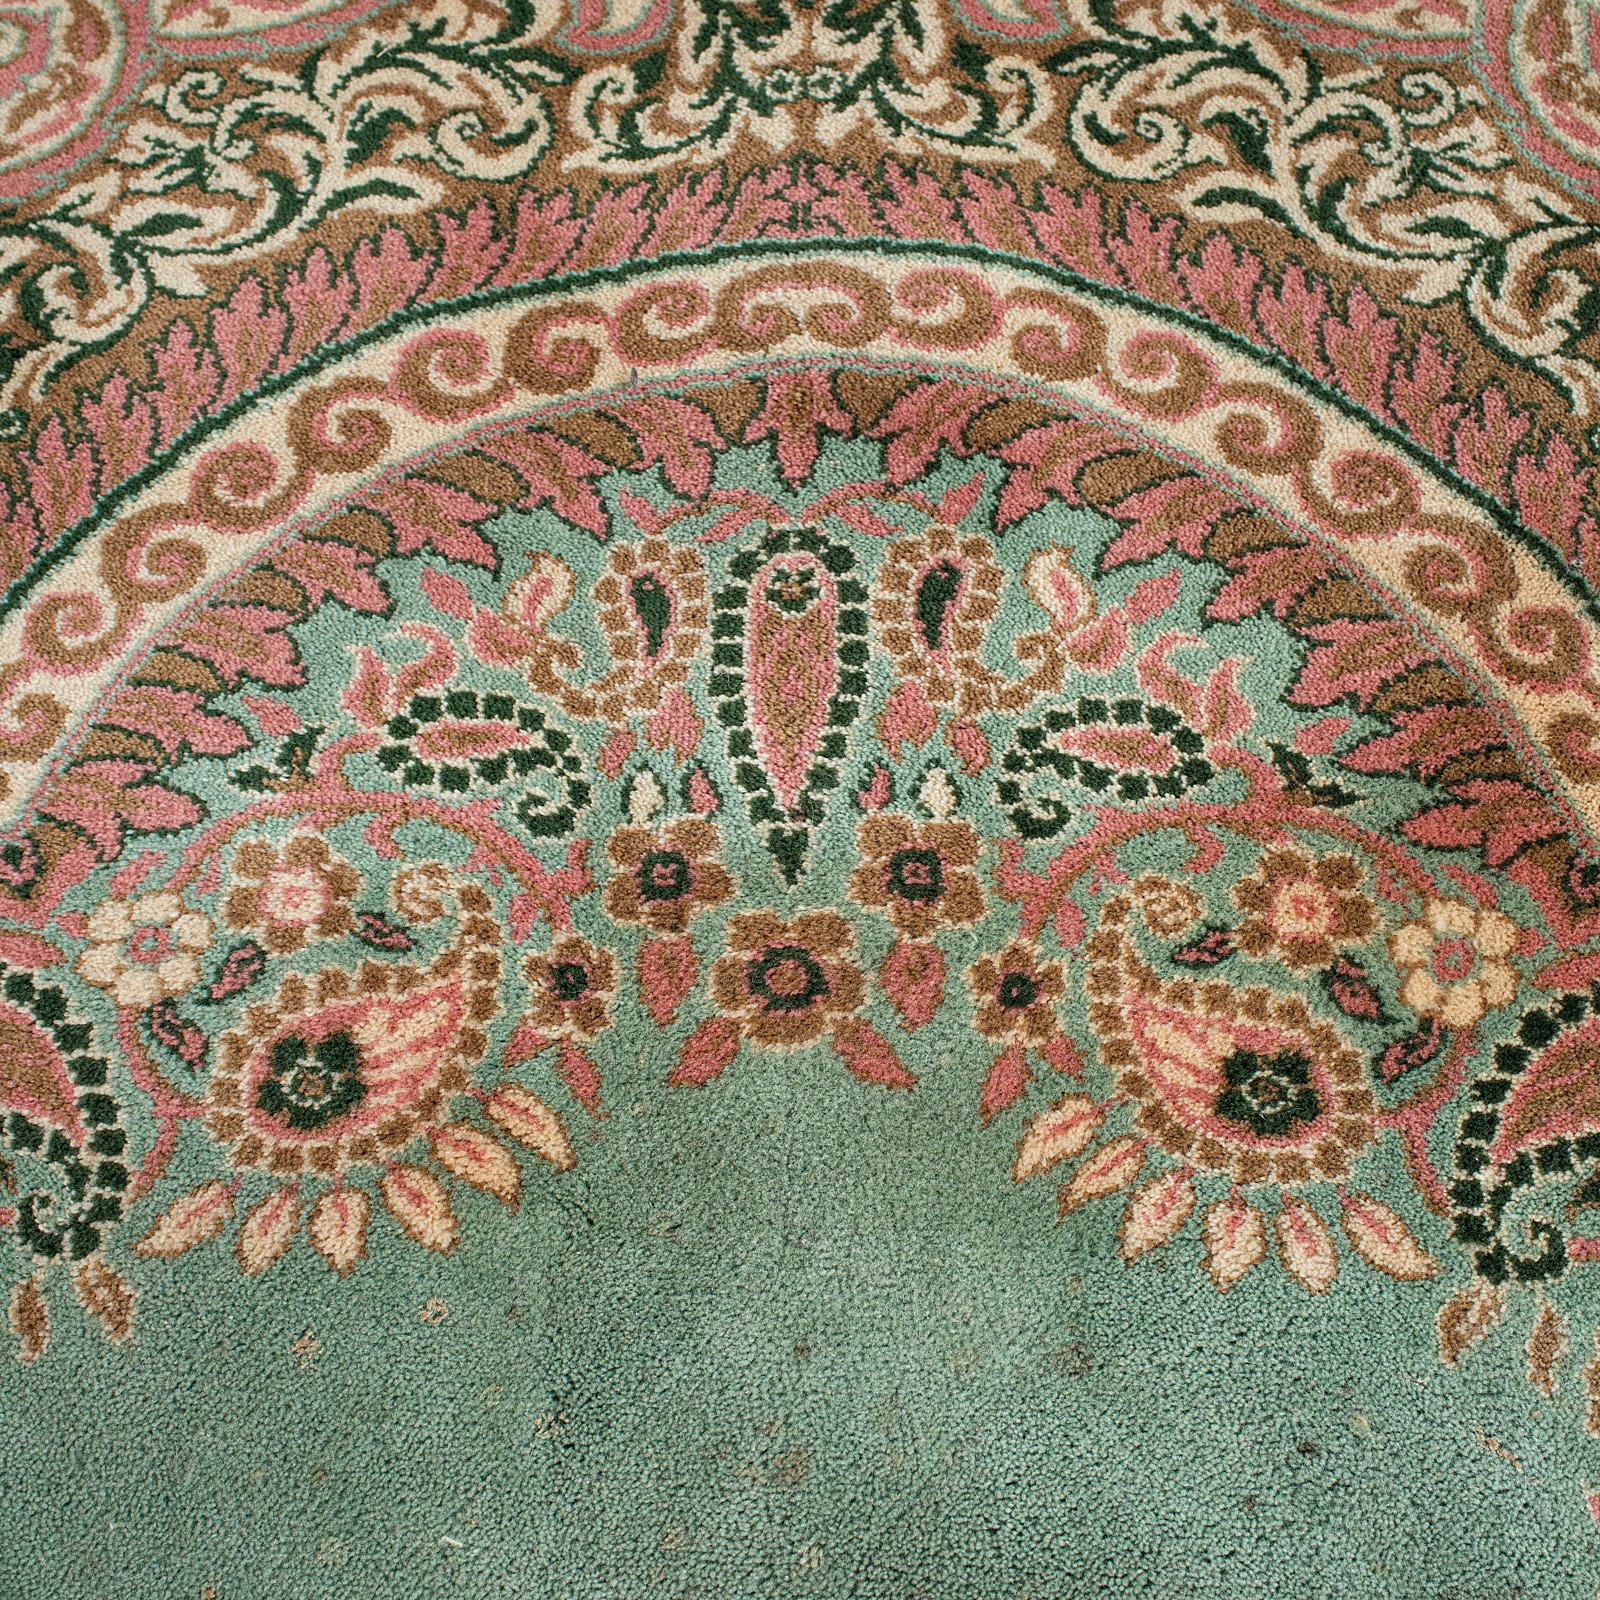 Very Large 16 Foot Vintage Keshan Rug, Persian, Room Sized, Decorative, Carpet For Sale 5